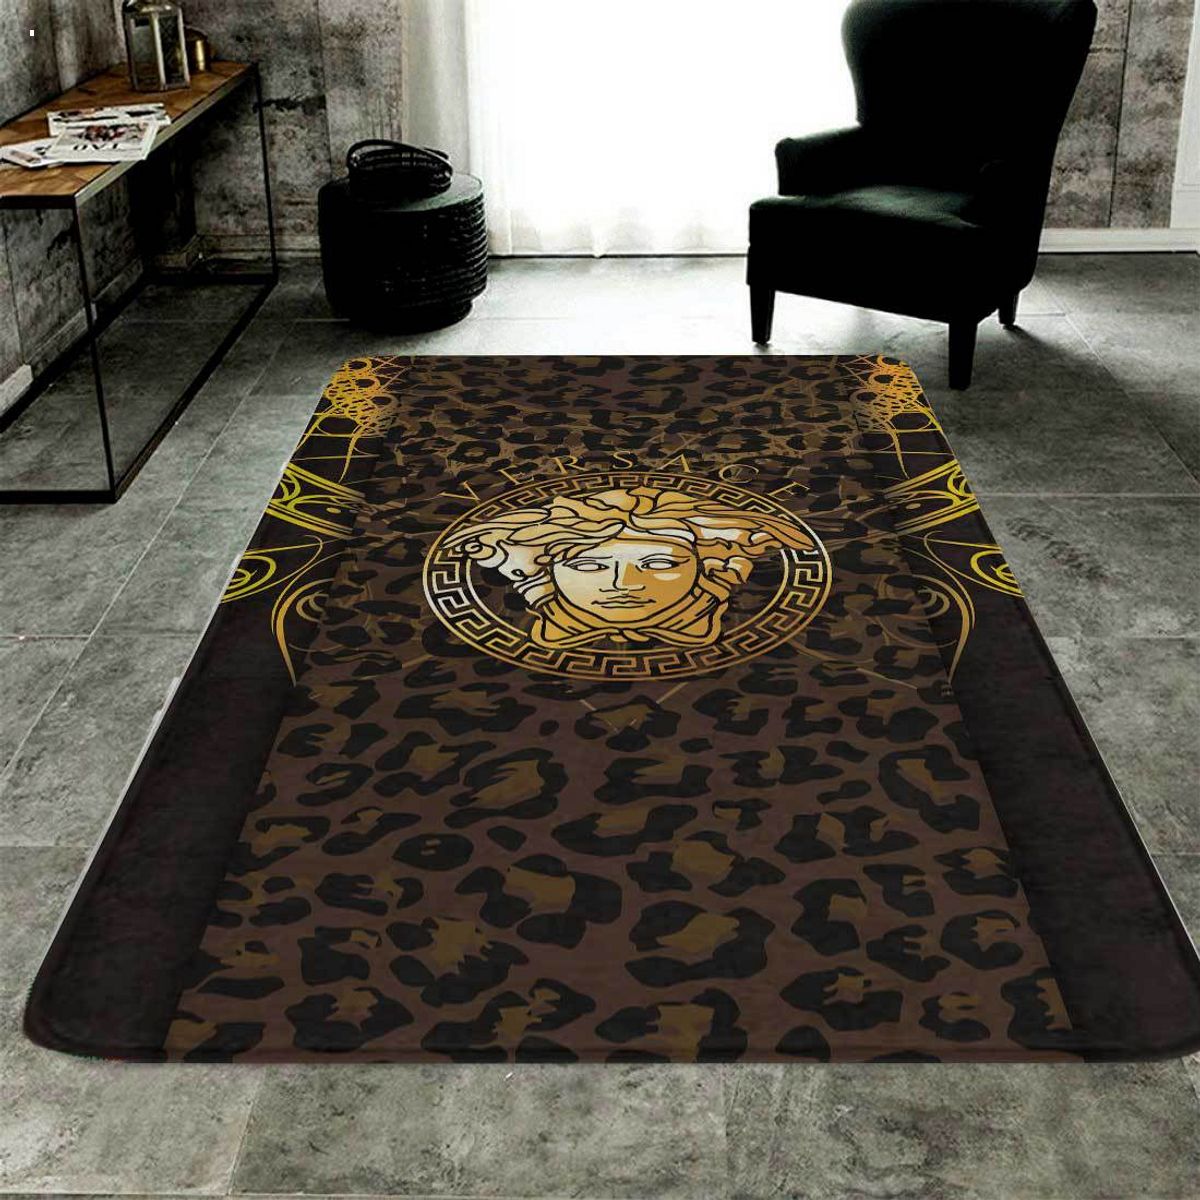 Versace Leopard Skin Luxury Brand Carpet Rug Limited Edition